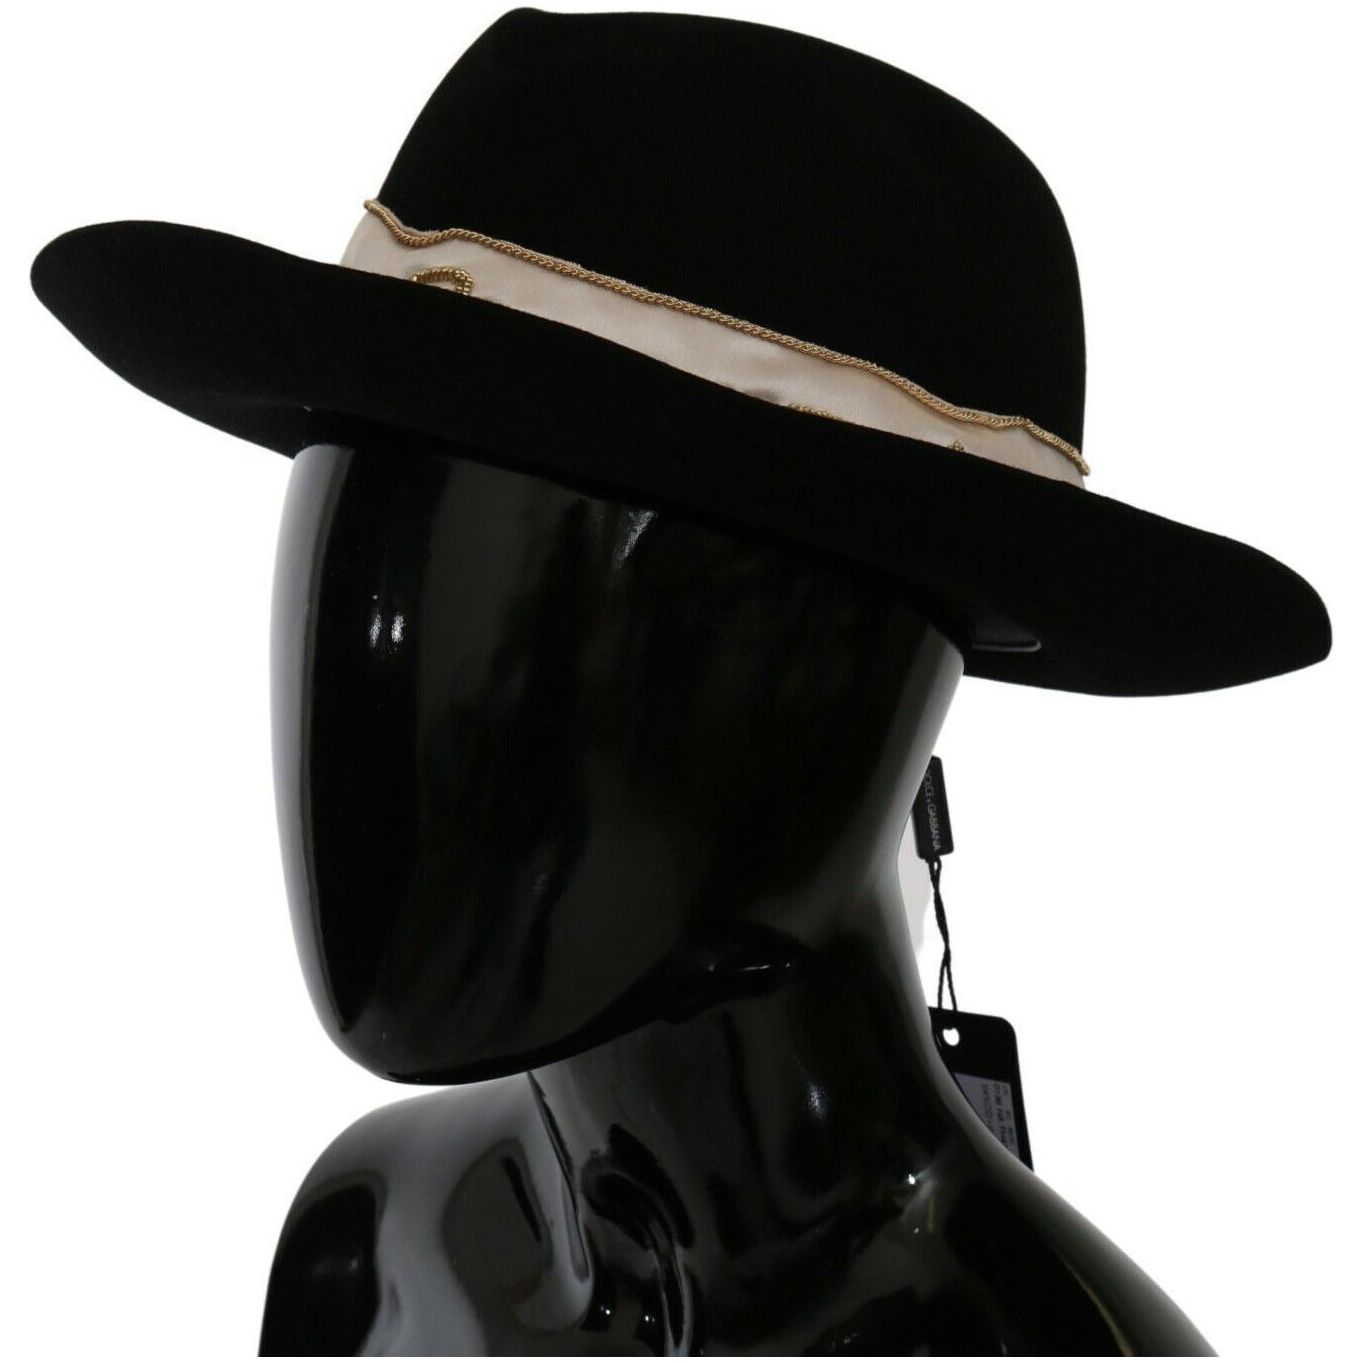 Dolce & Gabbana Elegant Black Lapin Wide Brim Panama Hat WOMAN HATS black-lapin-amor-gignit-wide-brim-panama-hat